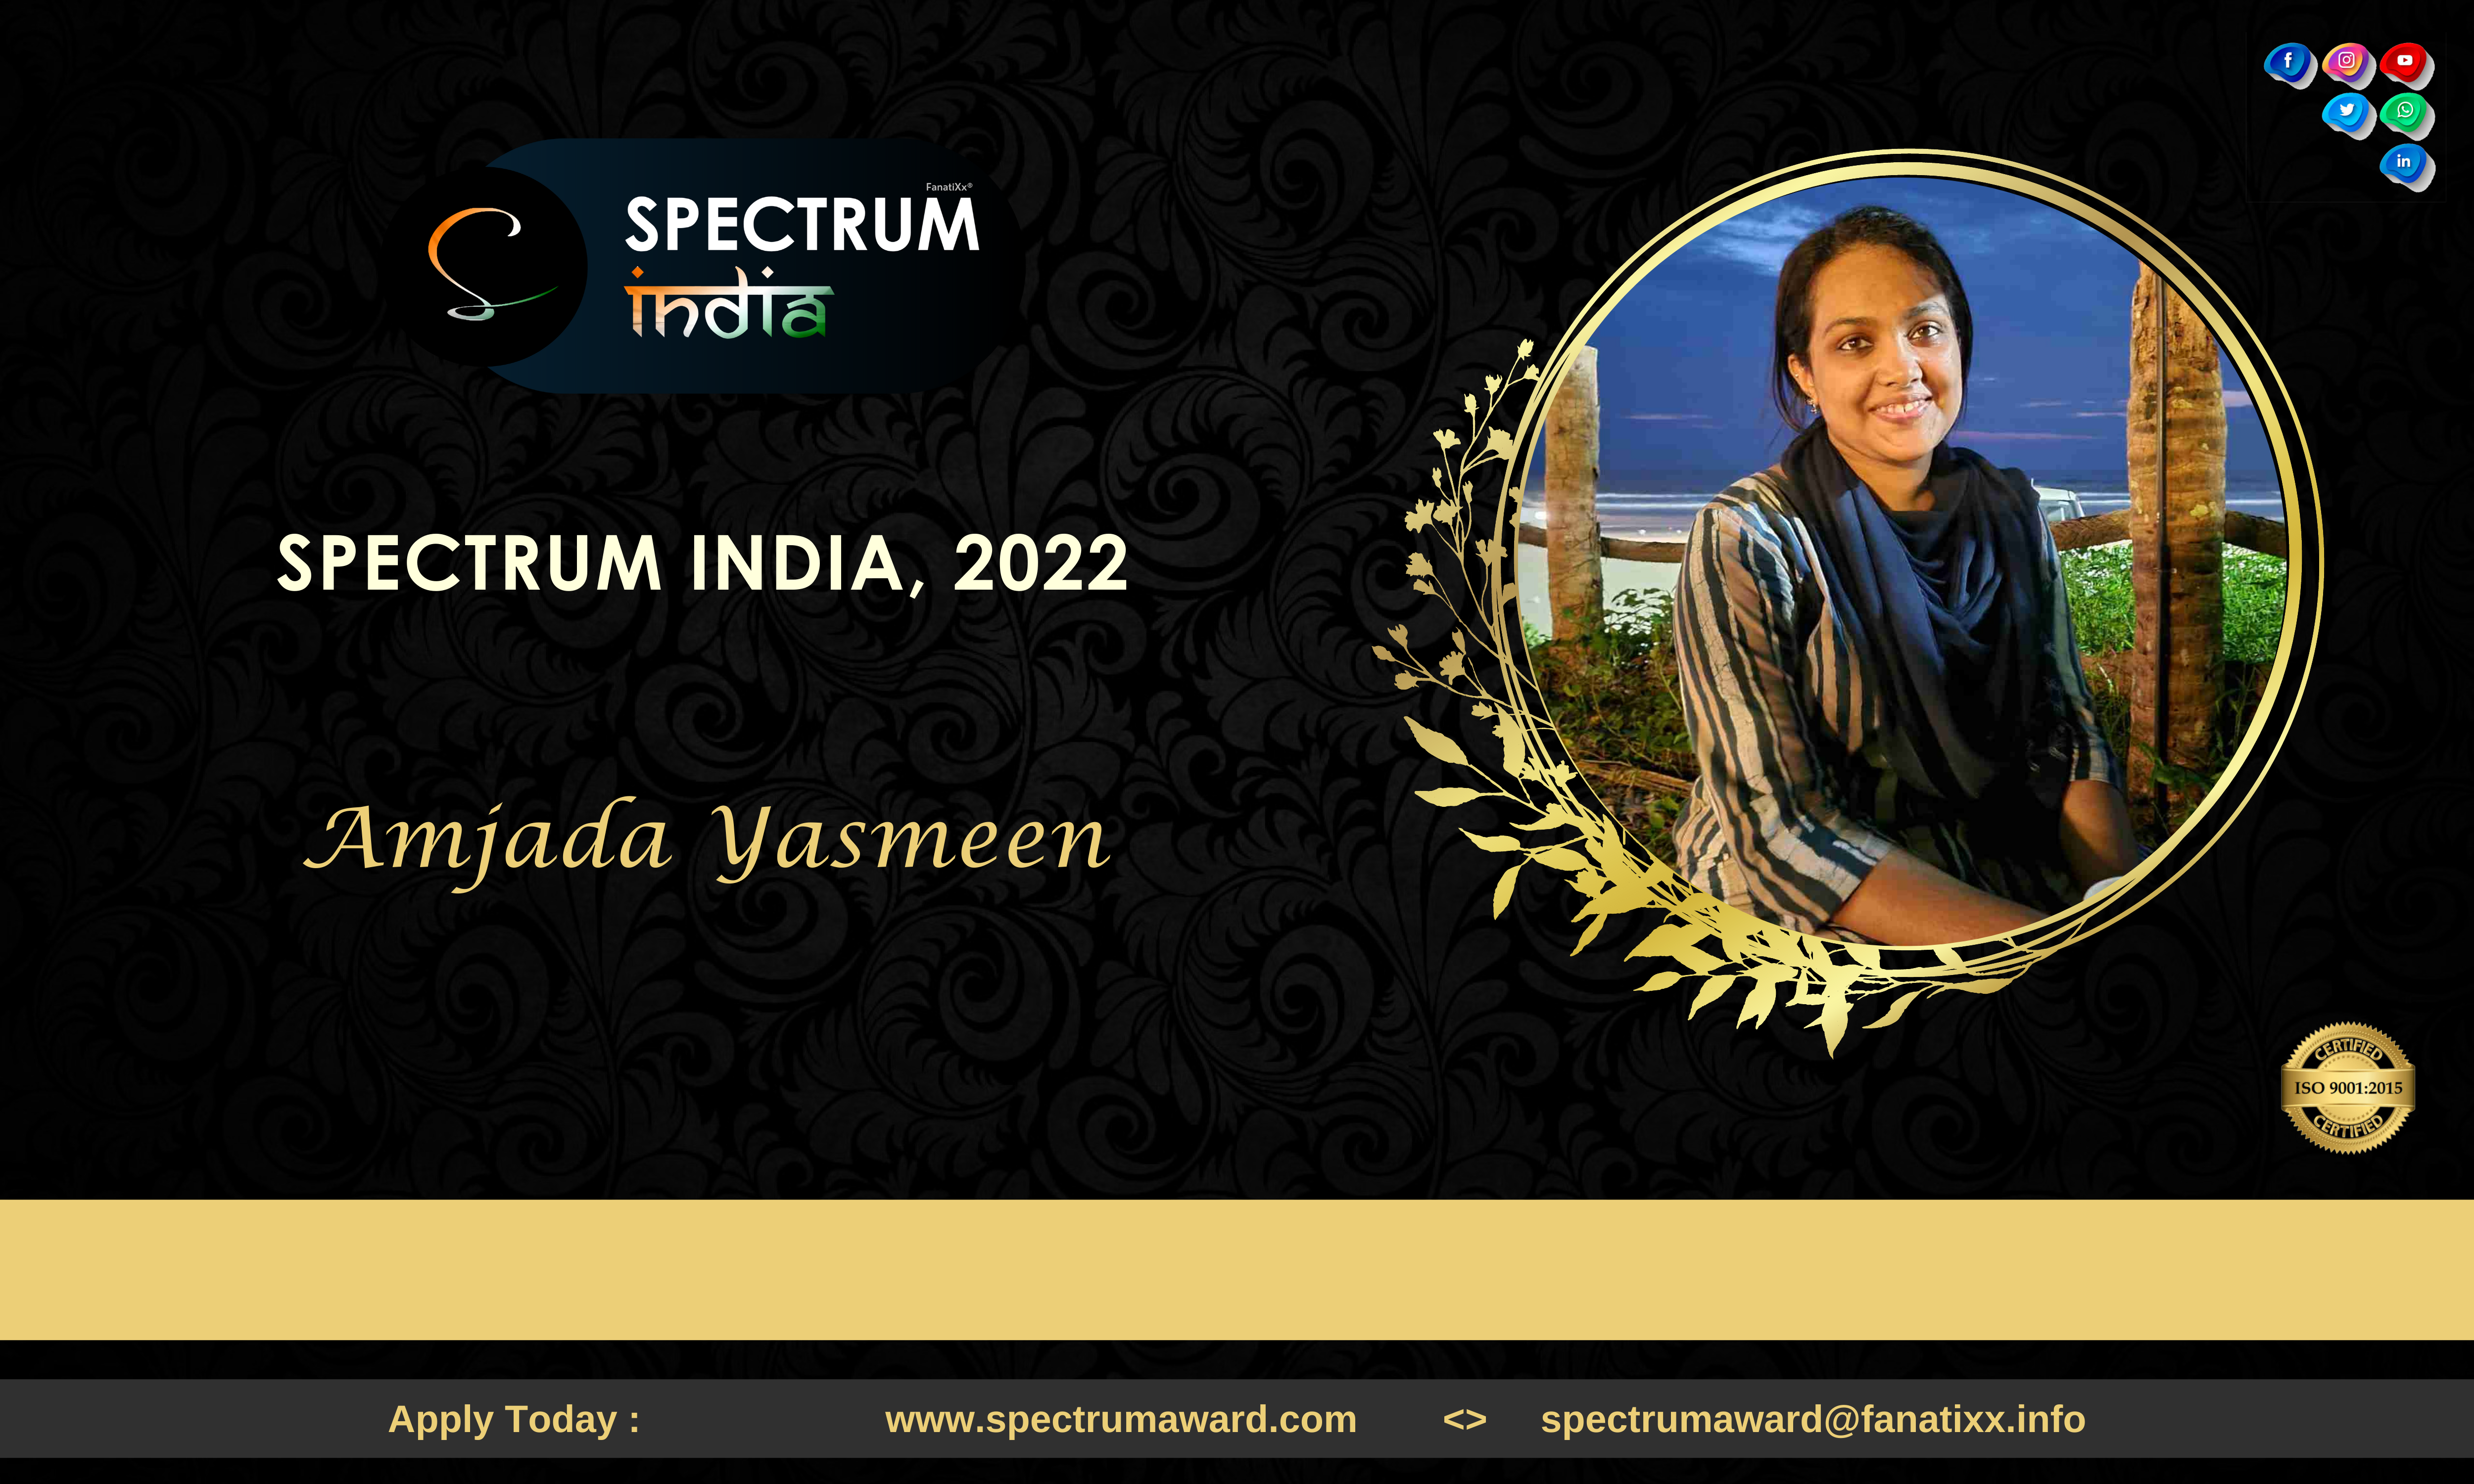 Kind, Dedicated, Loyal | Dr Amjada Yasmeen – Spectrum India, 2022 1